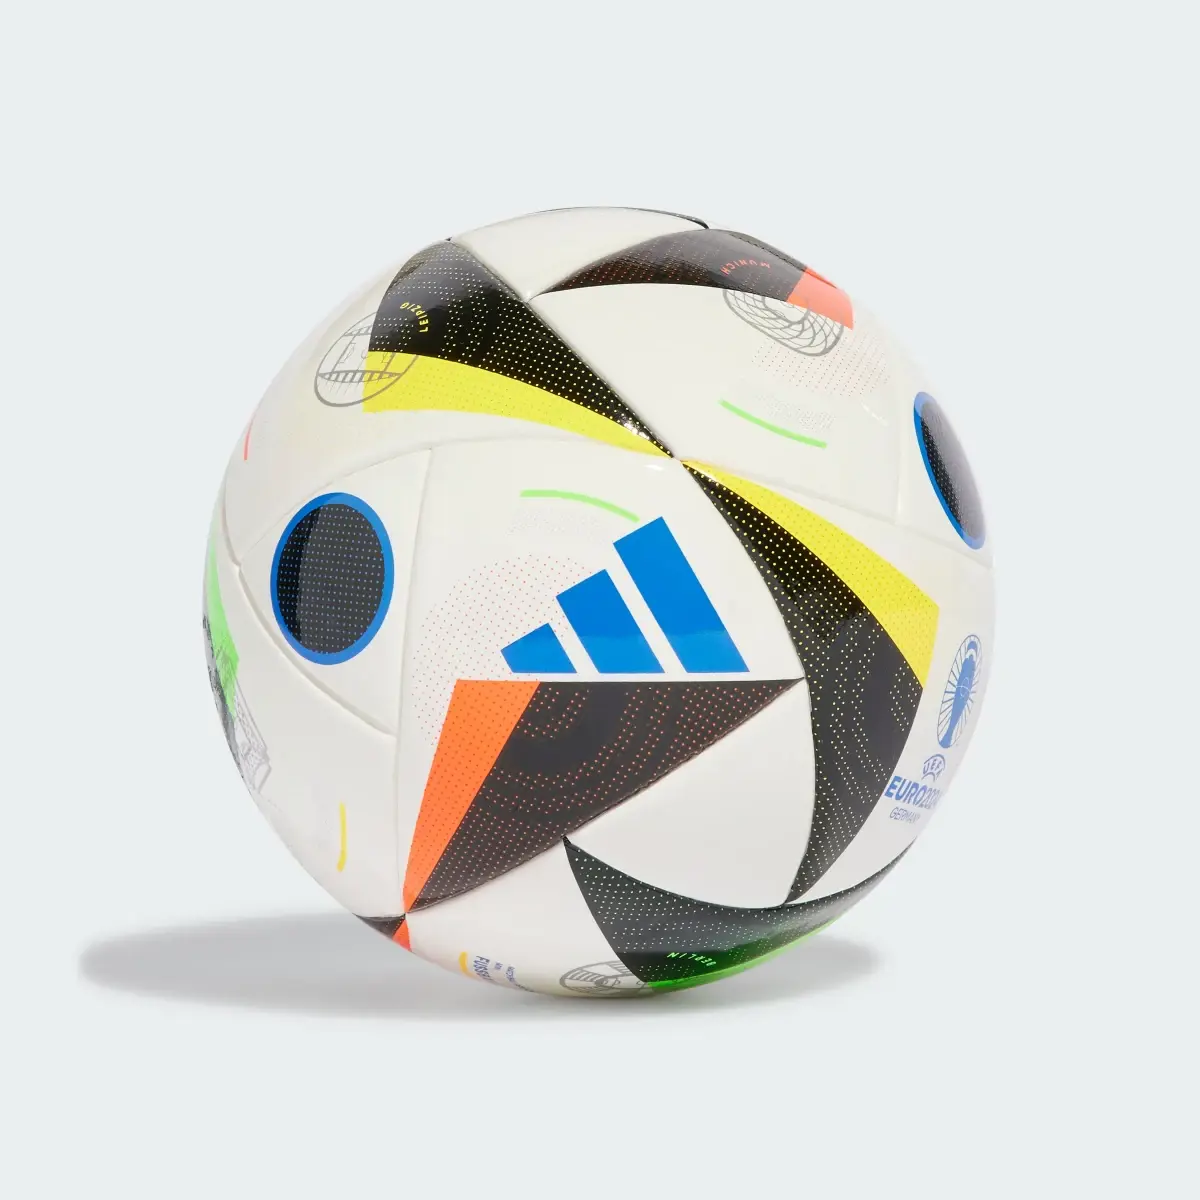 Adidas Fussballliebe Mini Ball. 2